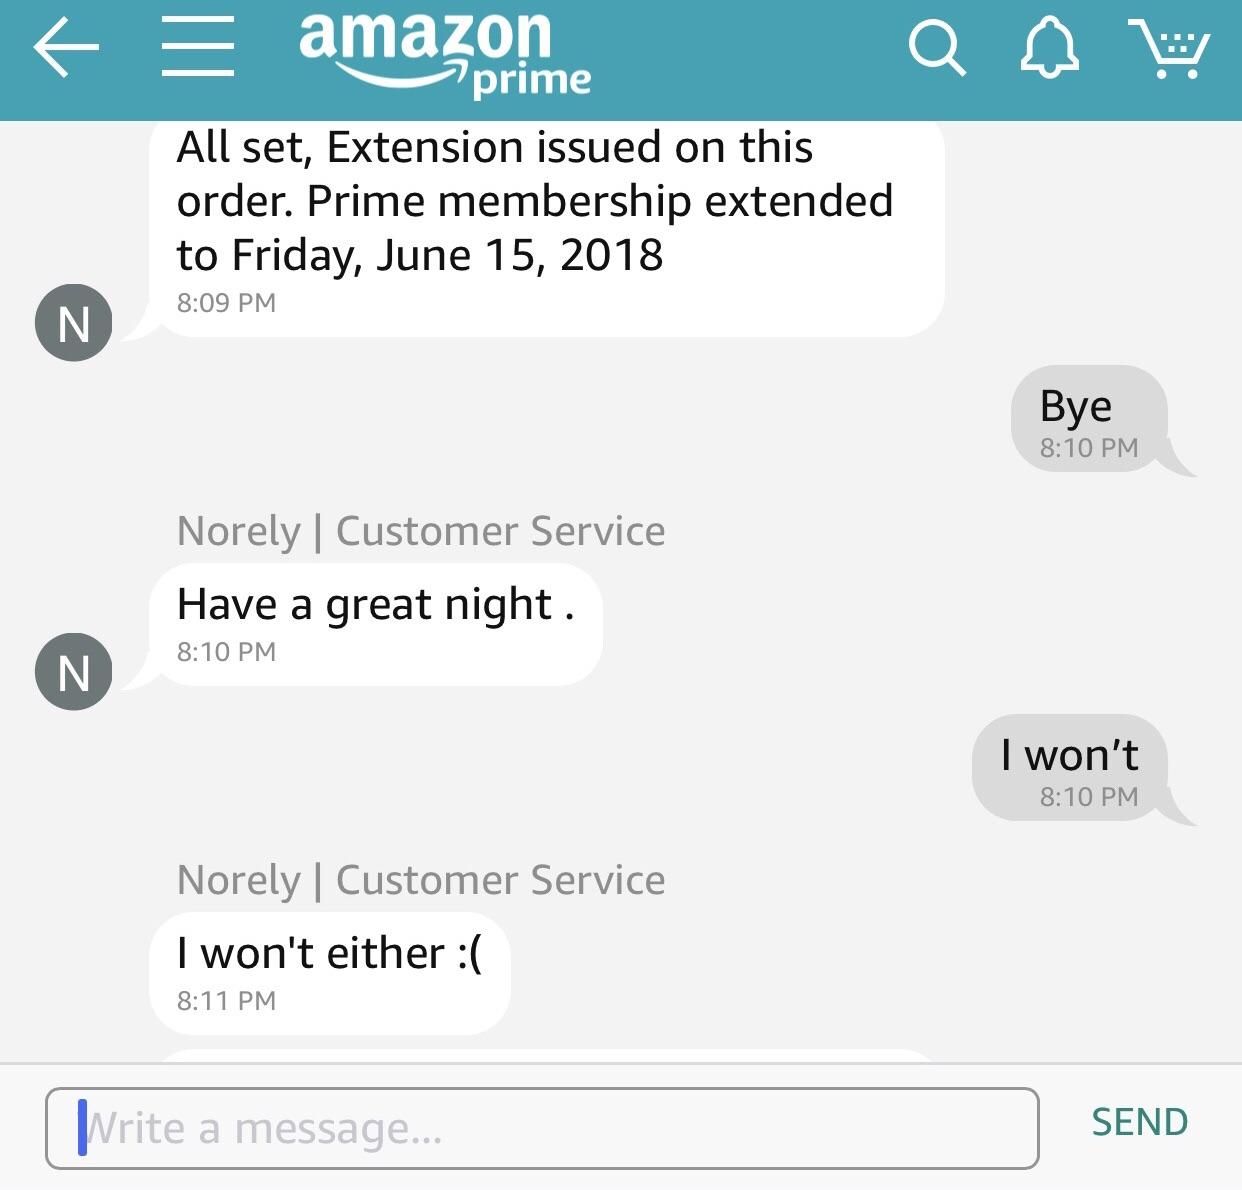 I upset Amazons customer service representative